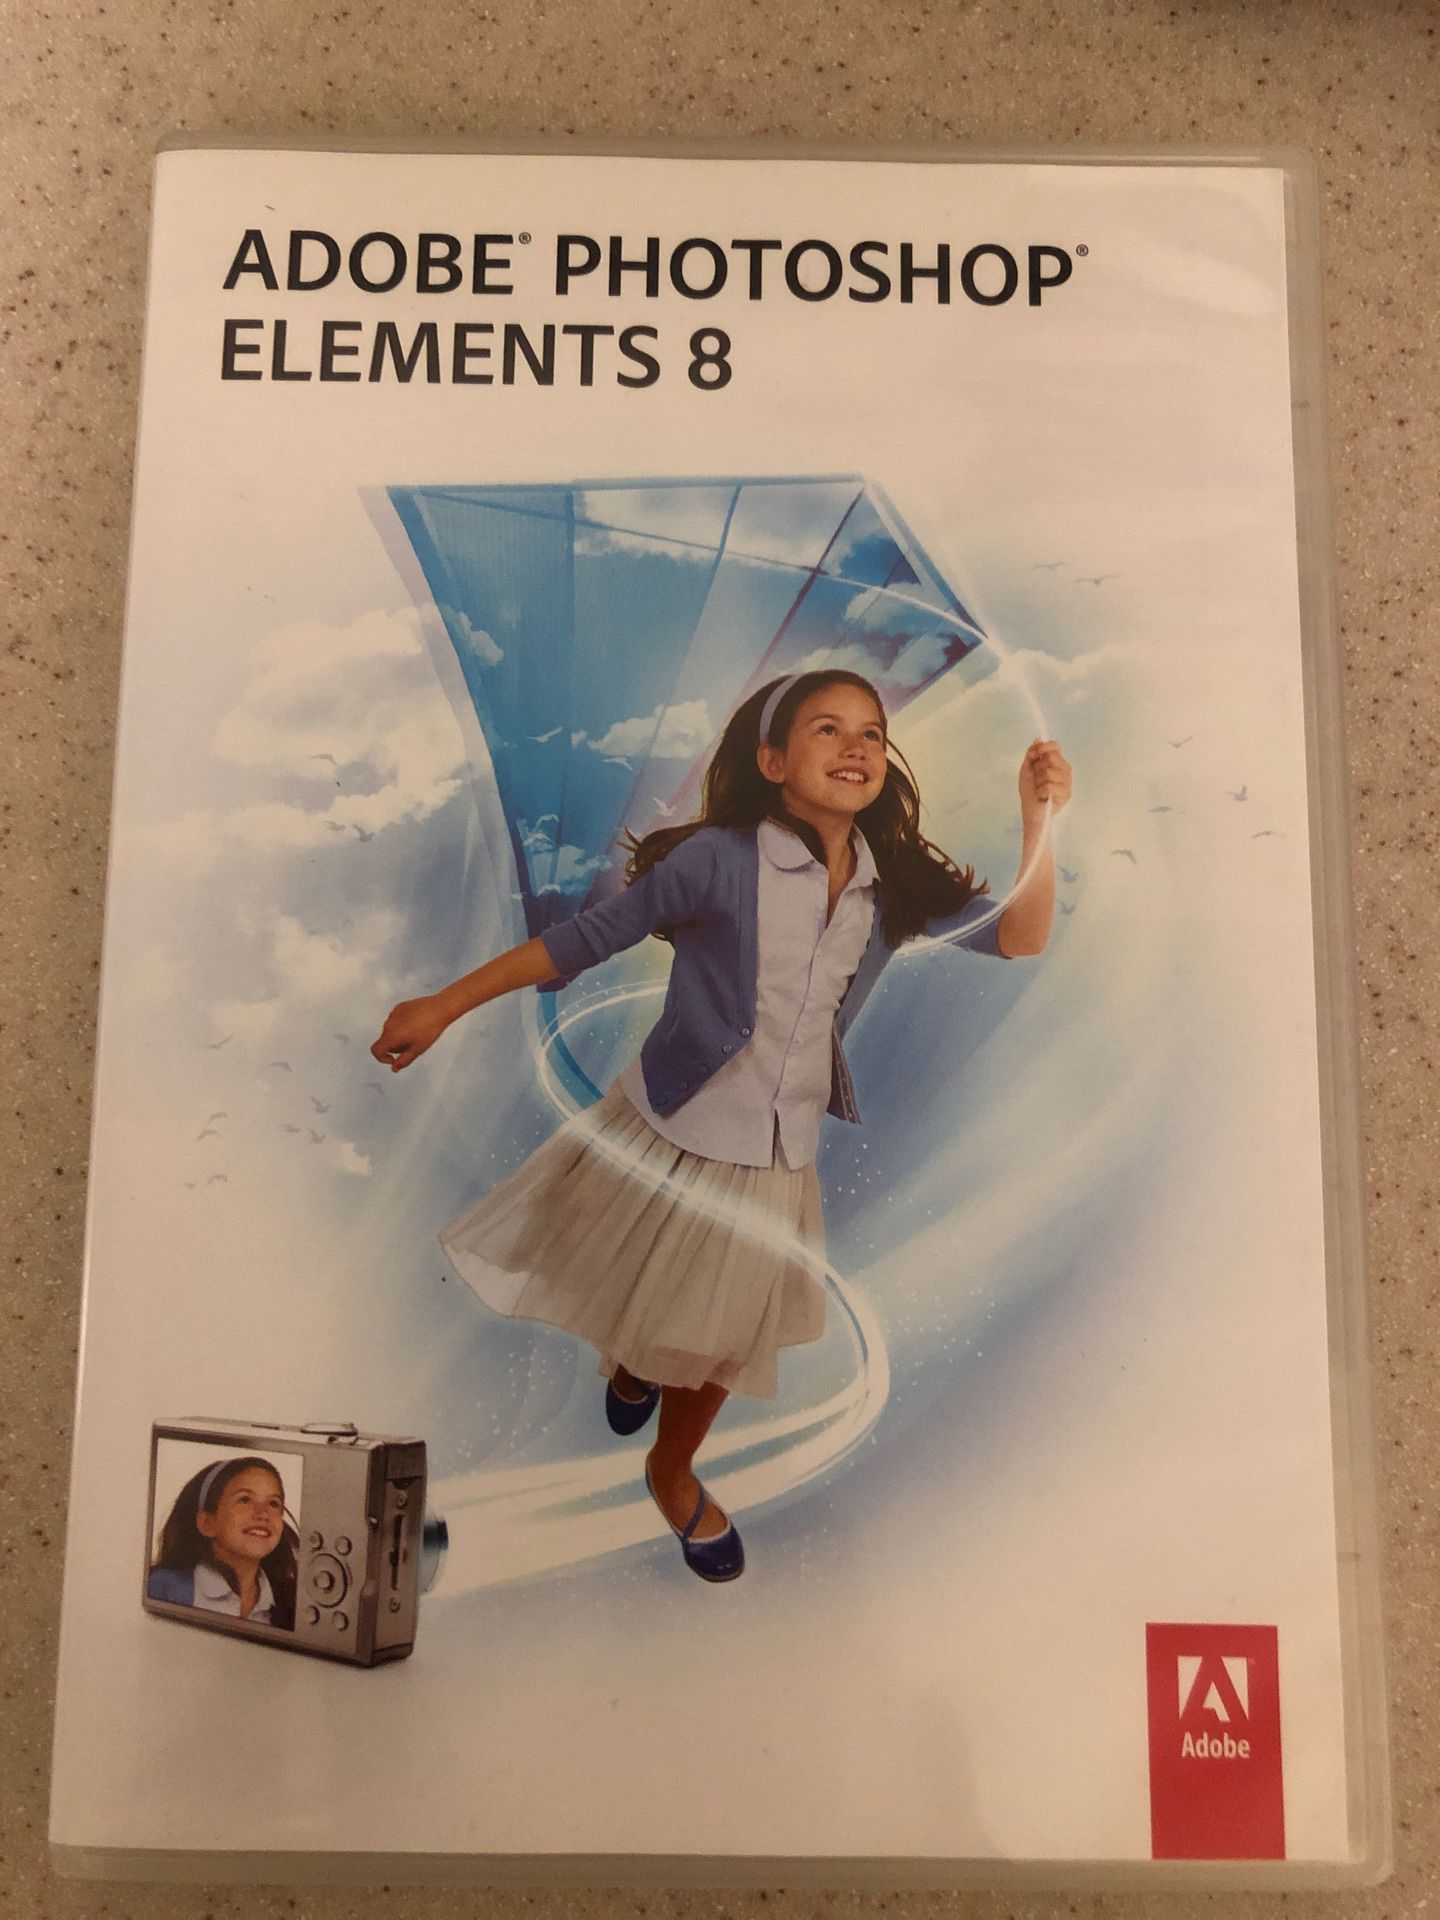 Adobe Photoshop Elements 8 for Mac